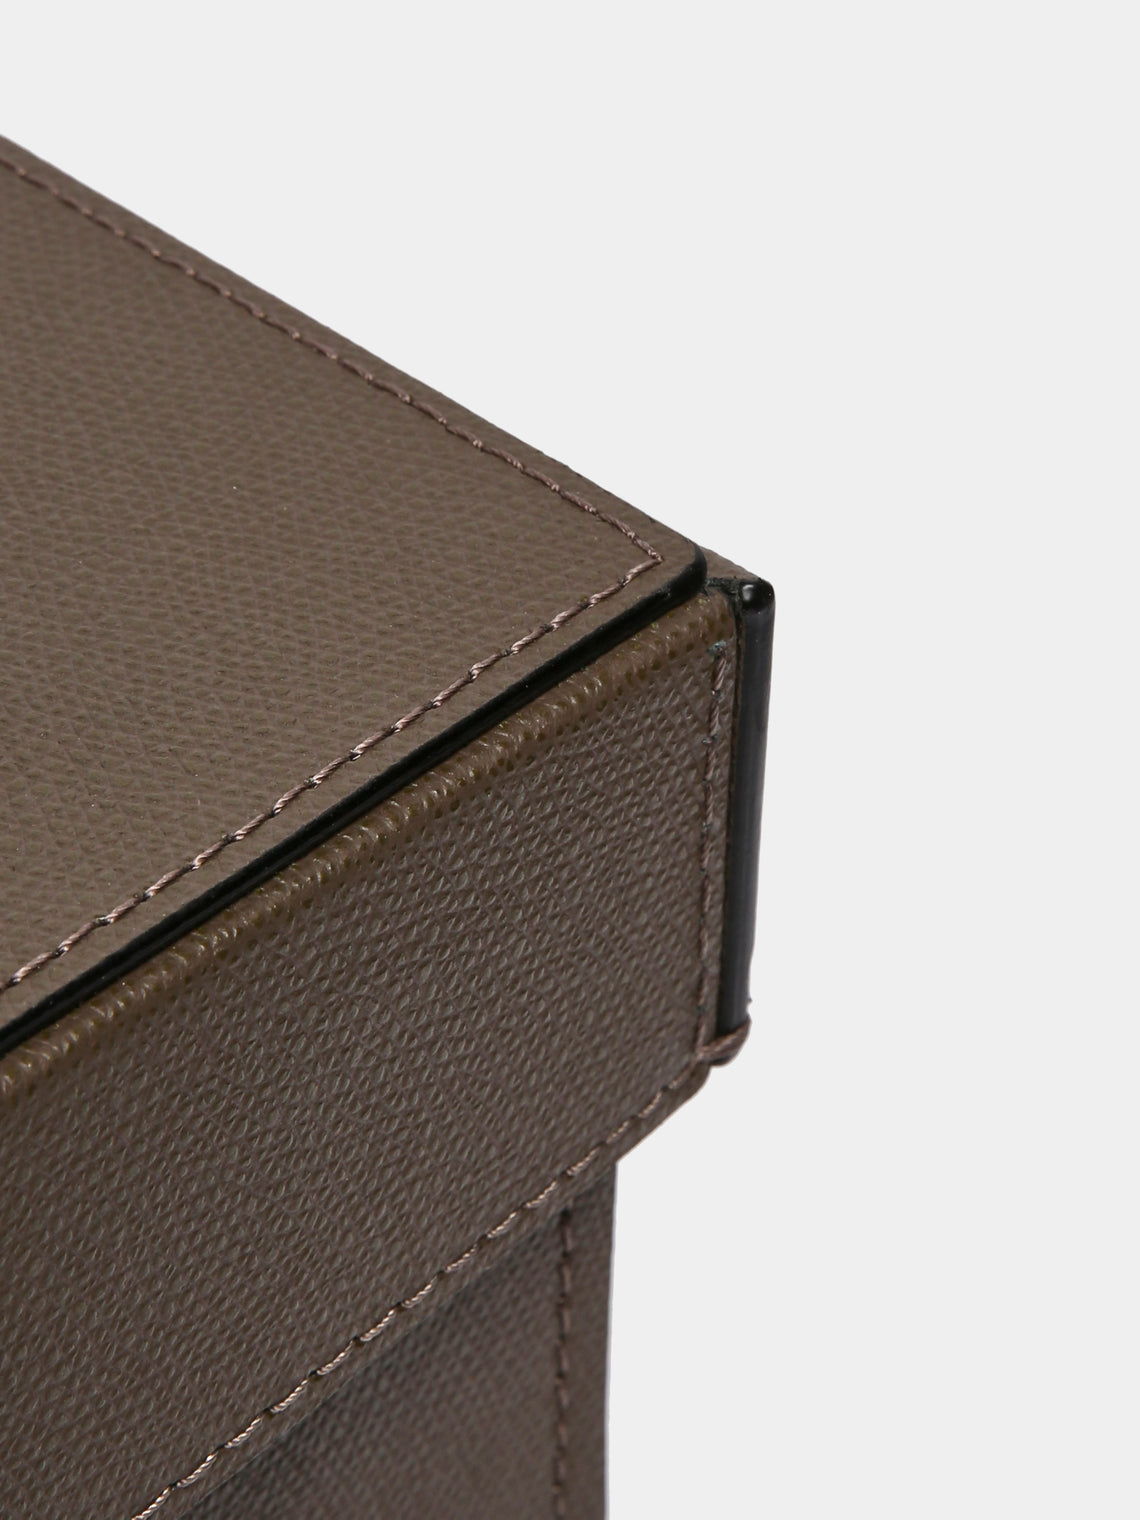 Giobagnara - Marea Leather Small Box - Brown - ABASK